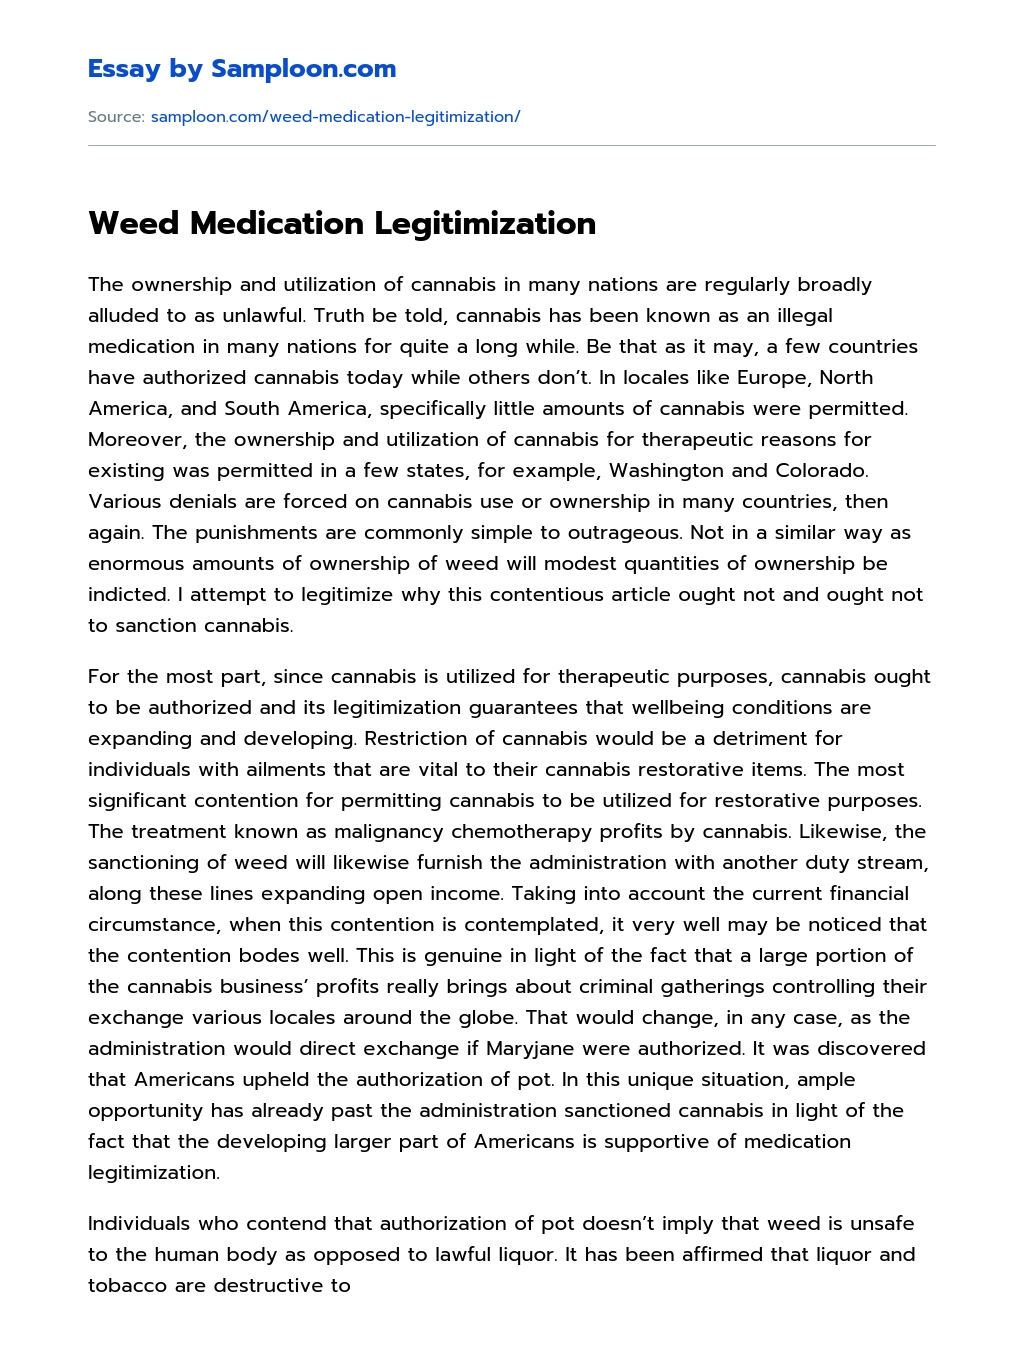 Weed Medication Legitimization essay